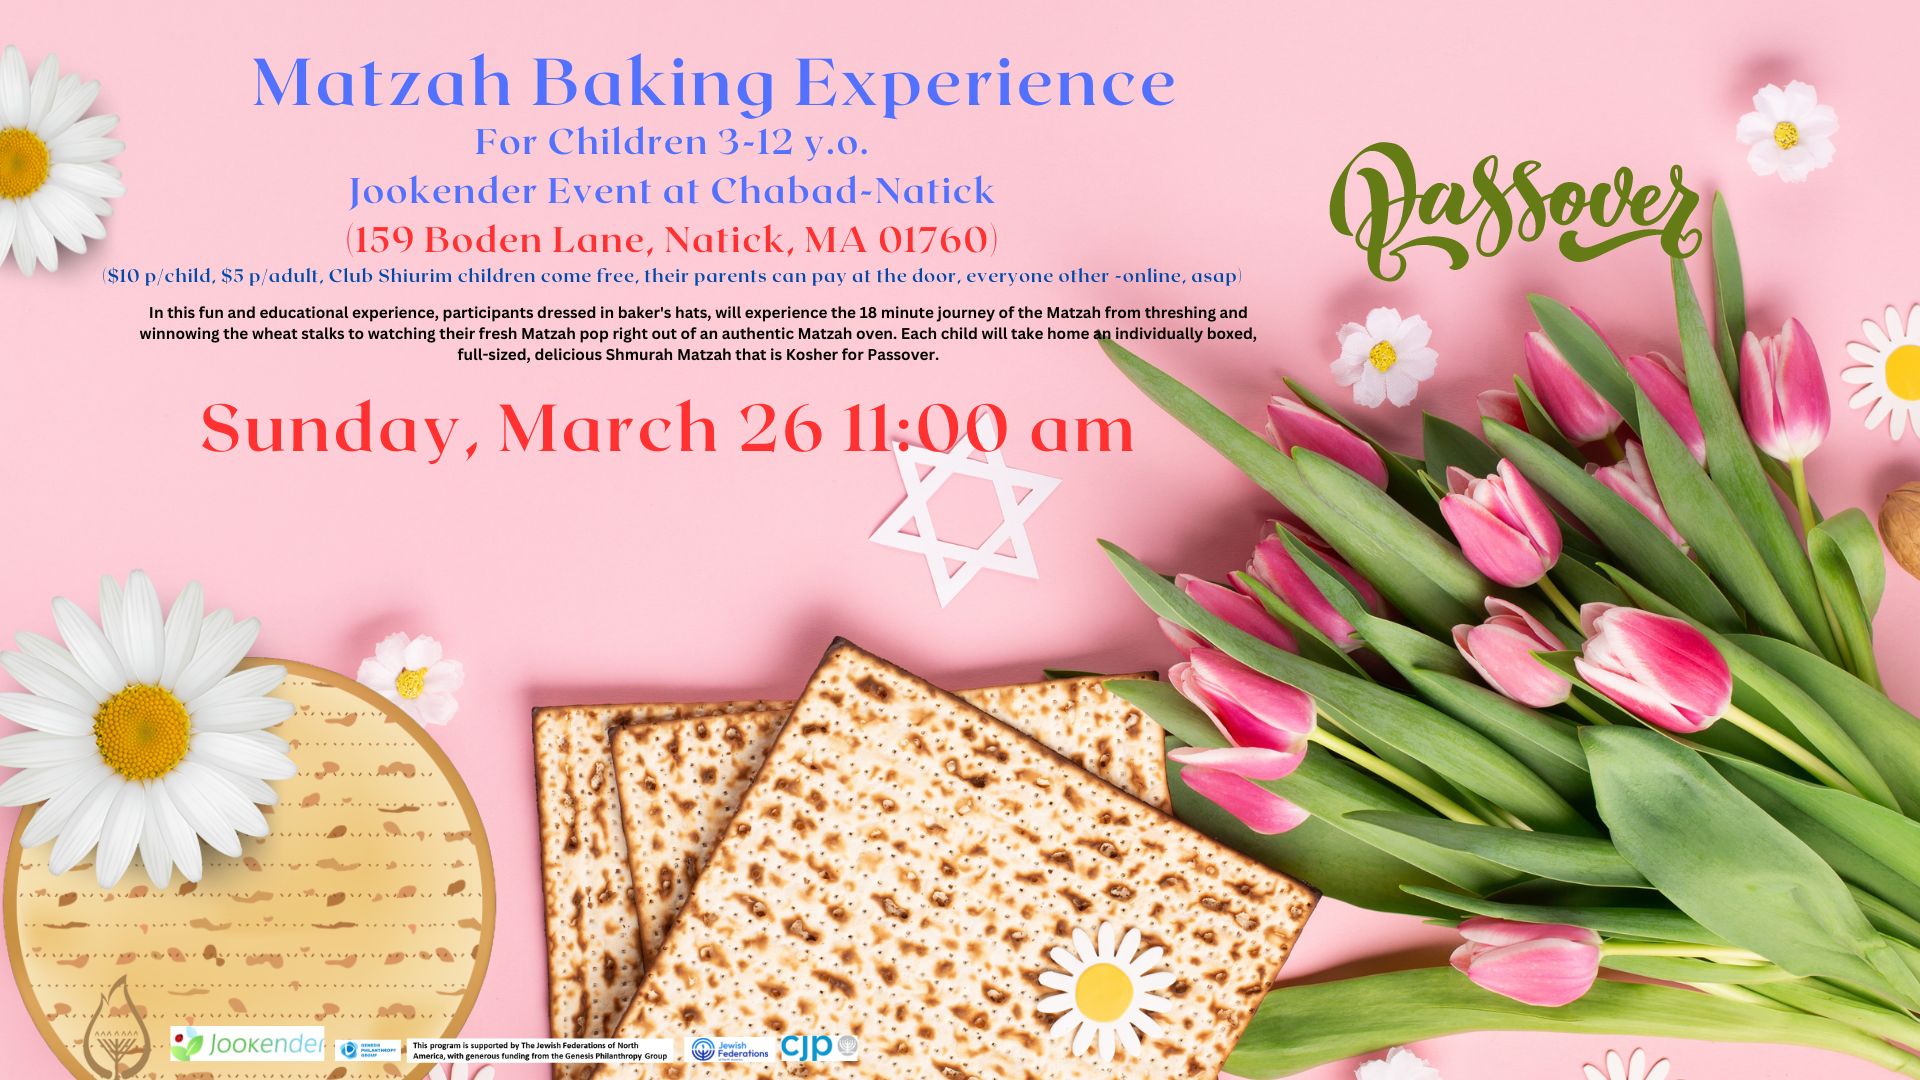 Matzah Baking Experience